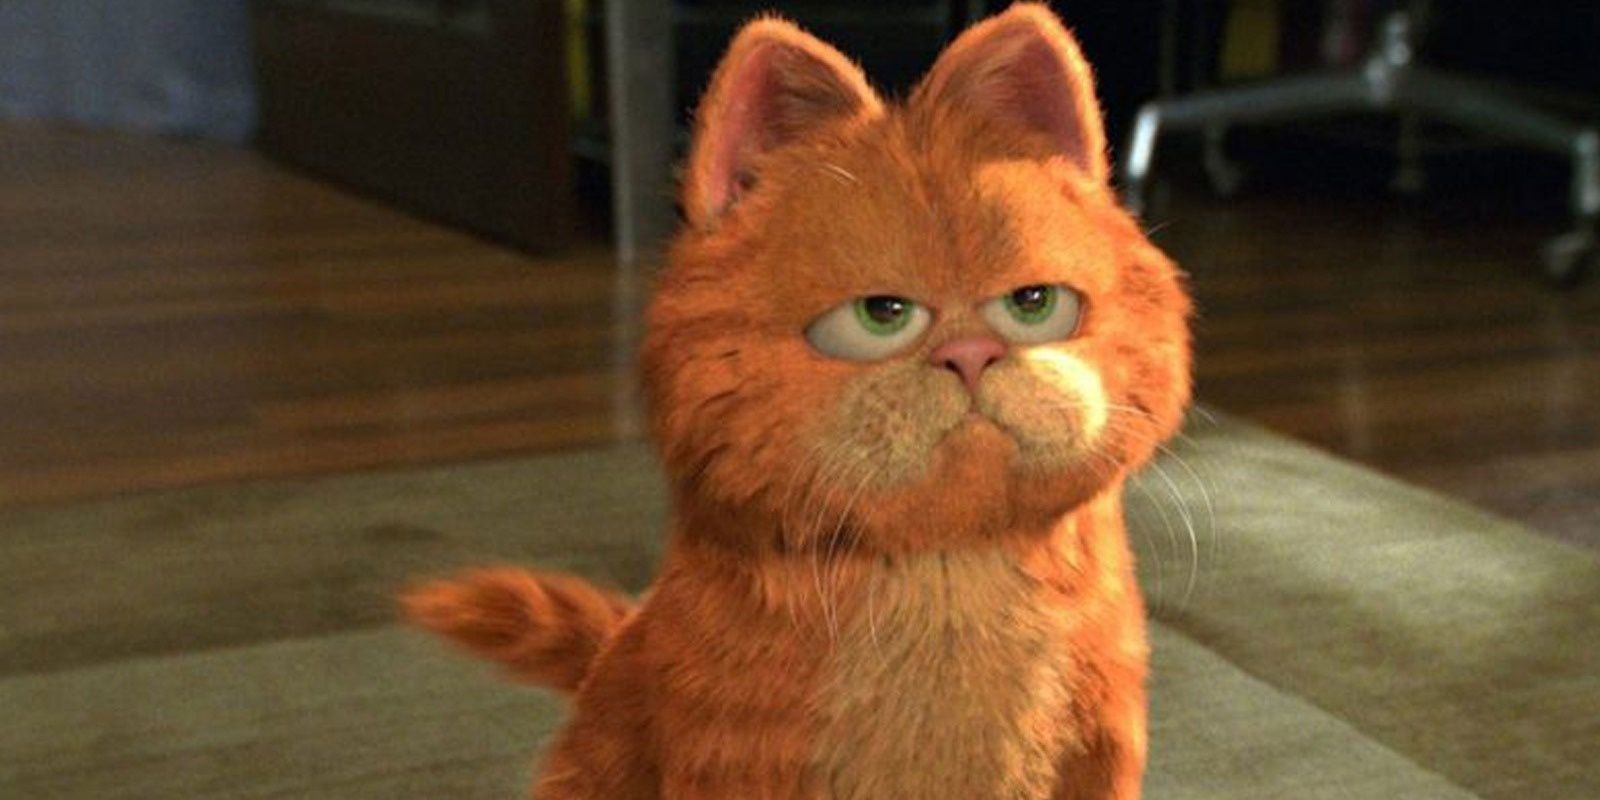 Bill Murray as Garfield